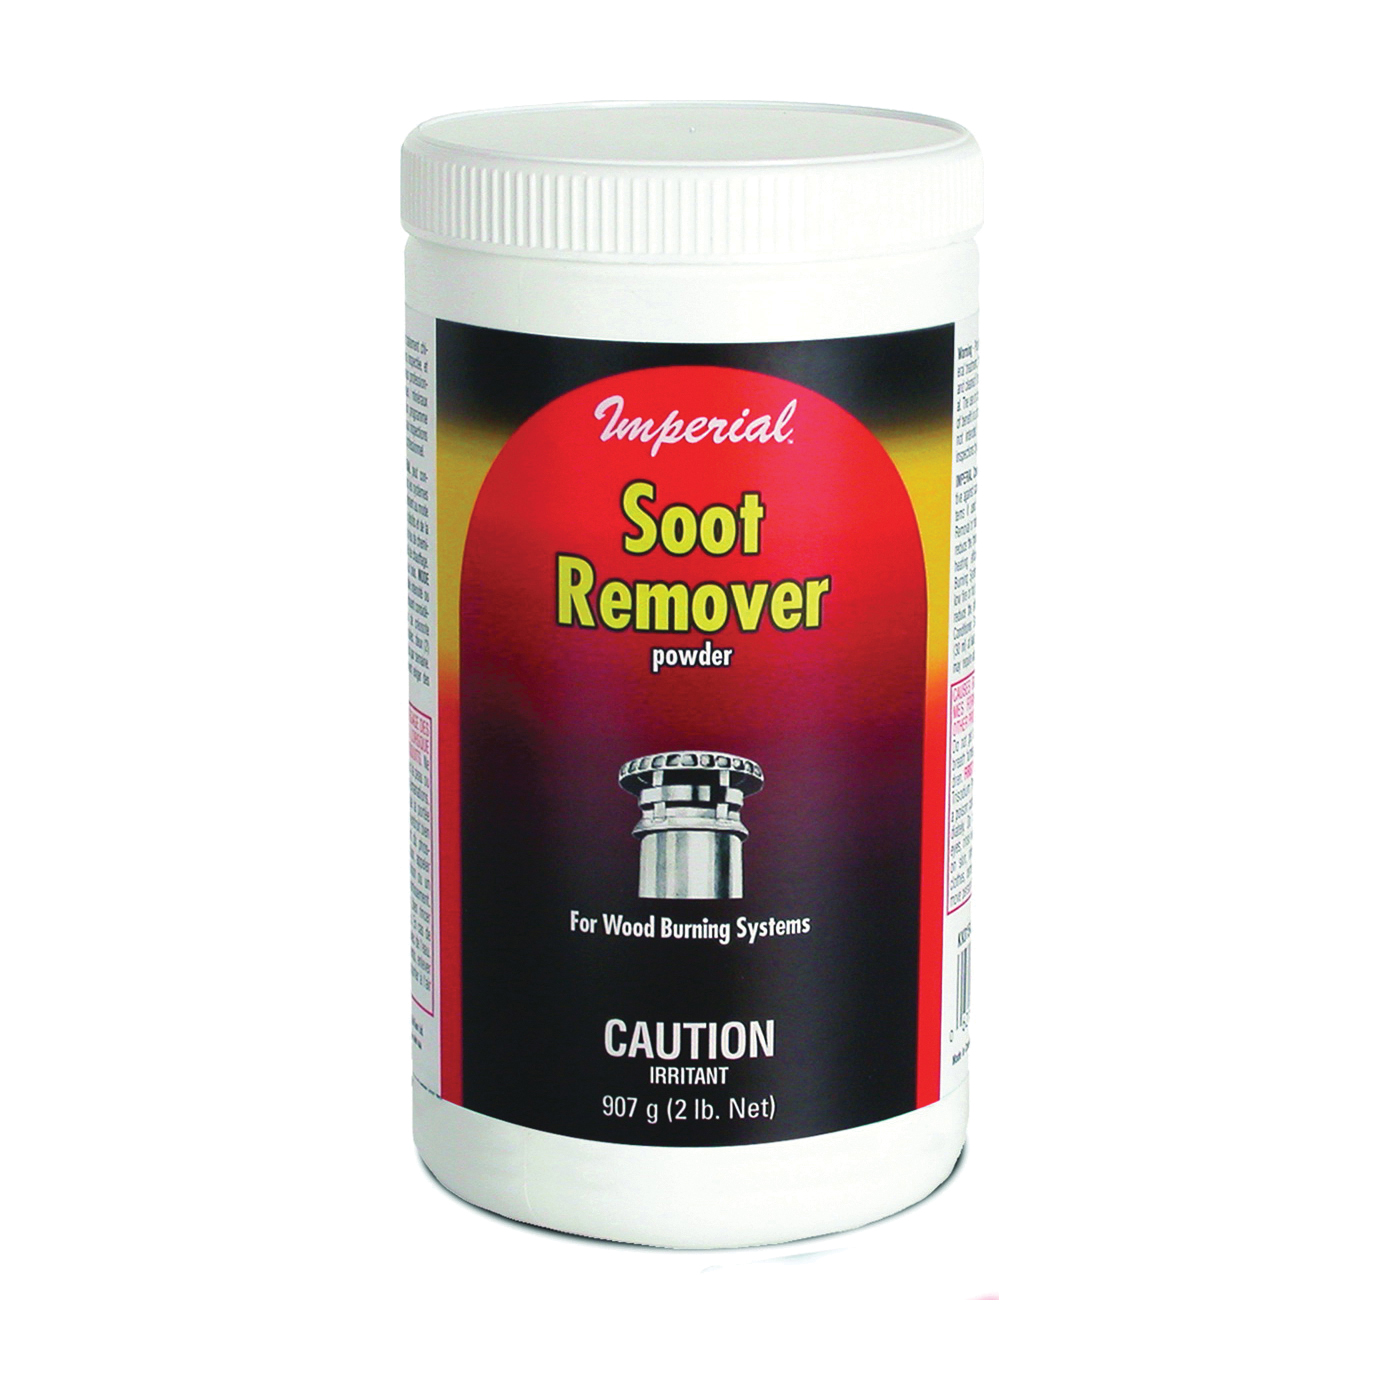 KK0293 Soot Remover, Powder, White, 2 lb Jar